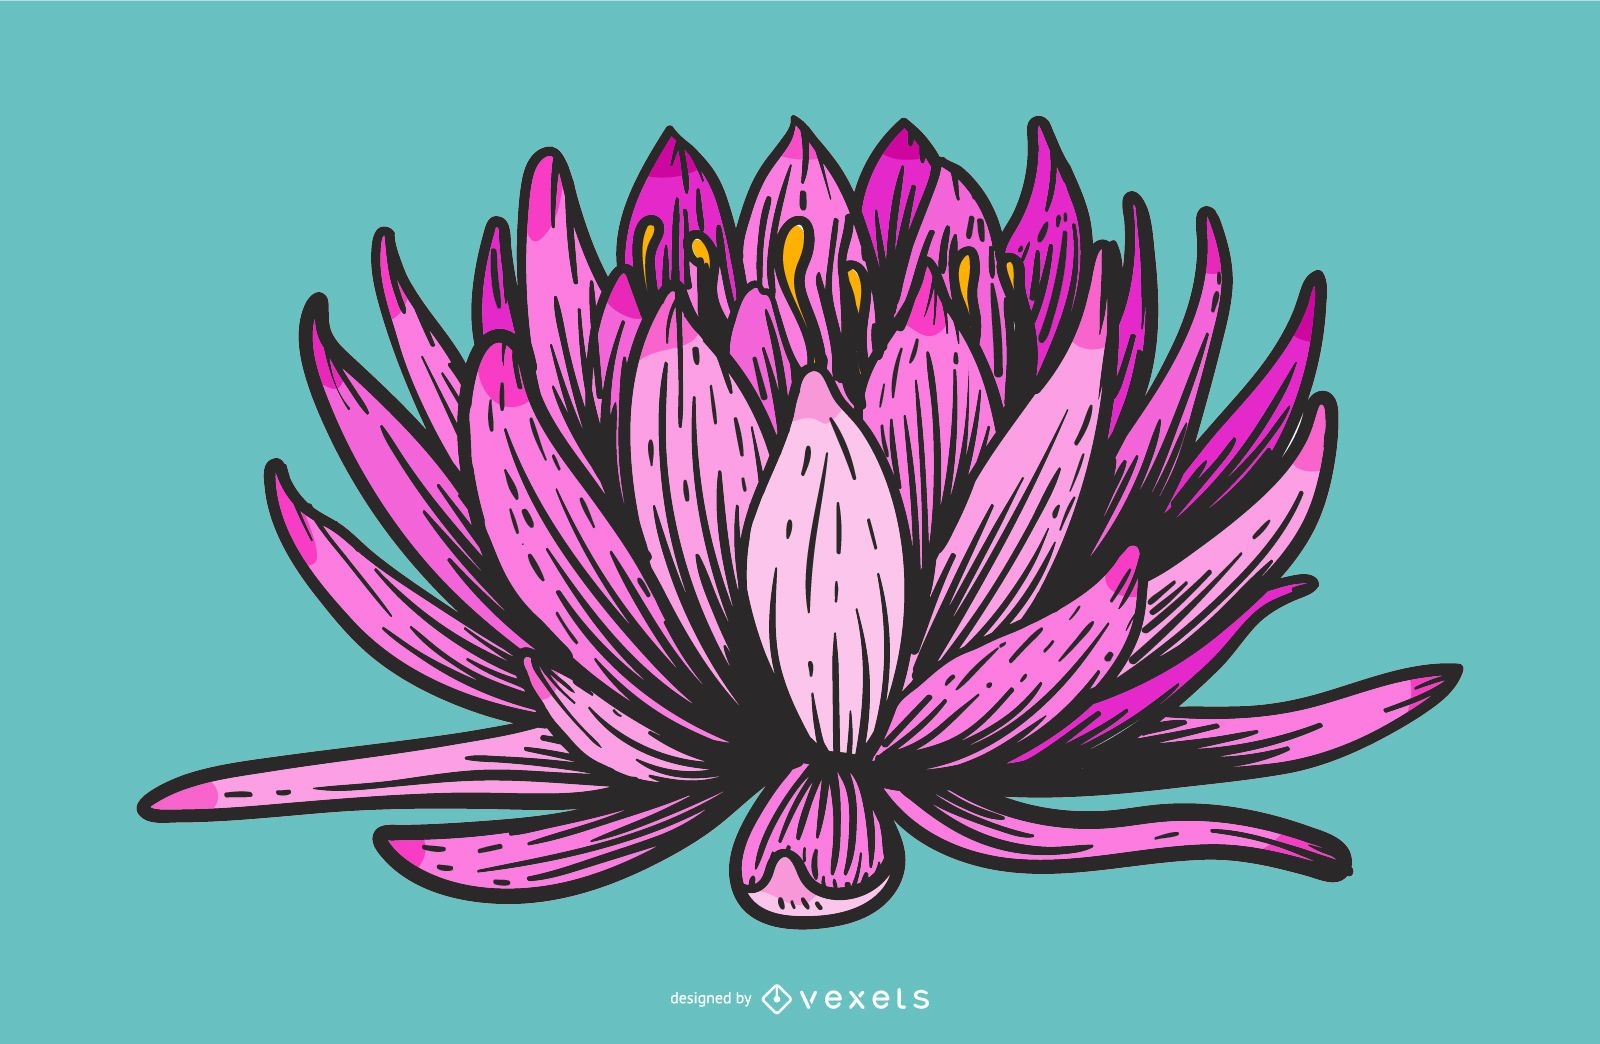 lotus flower animation